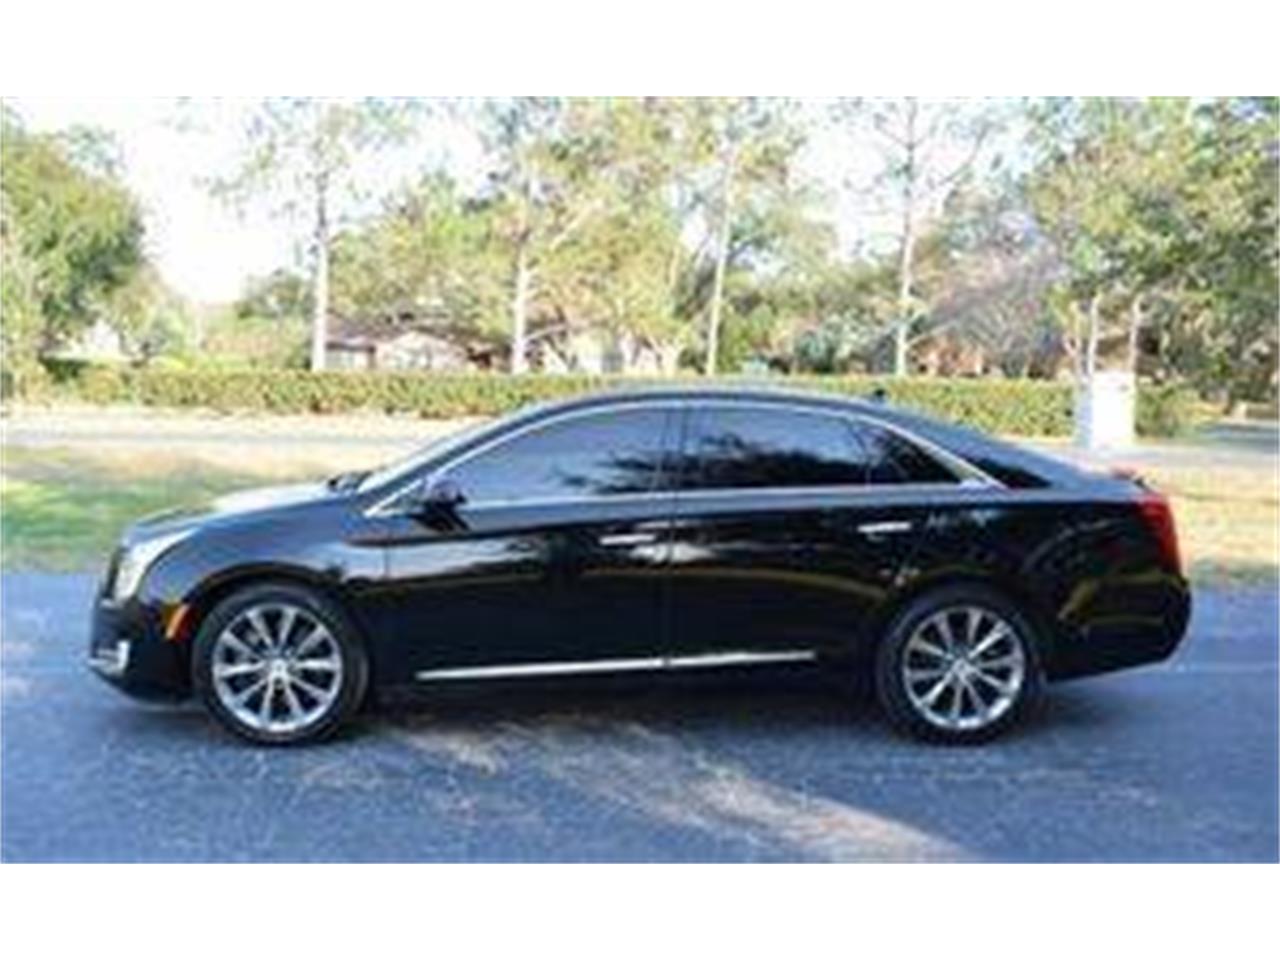 2013 Cadillac XTS for Sale | ClassicCars.com | CC-975583